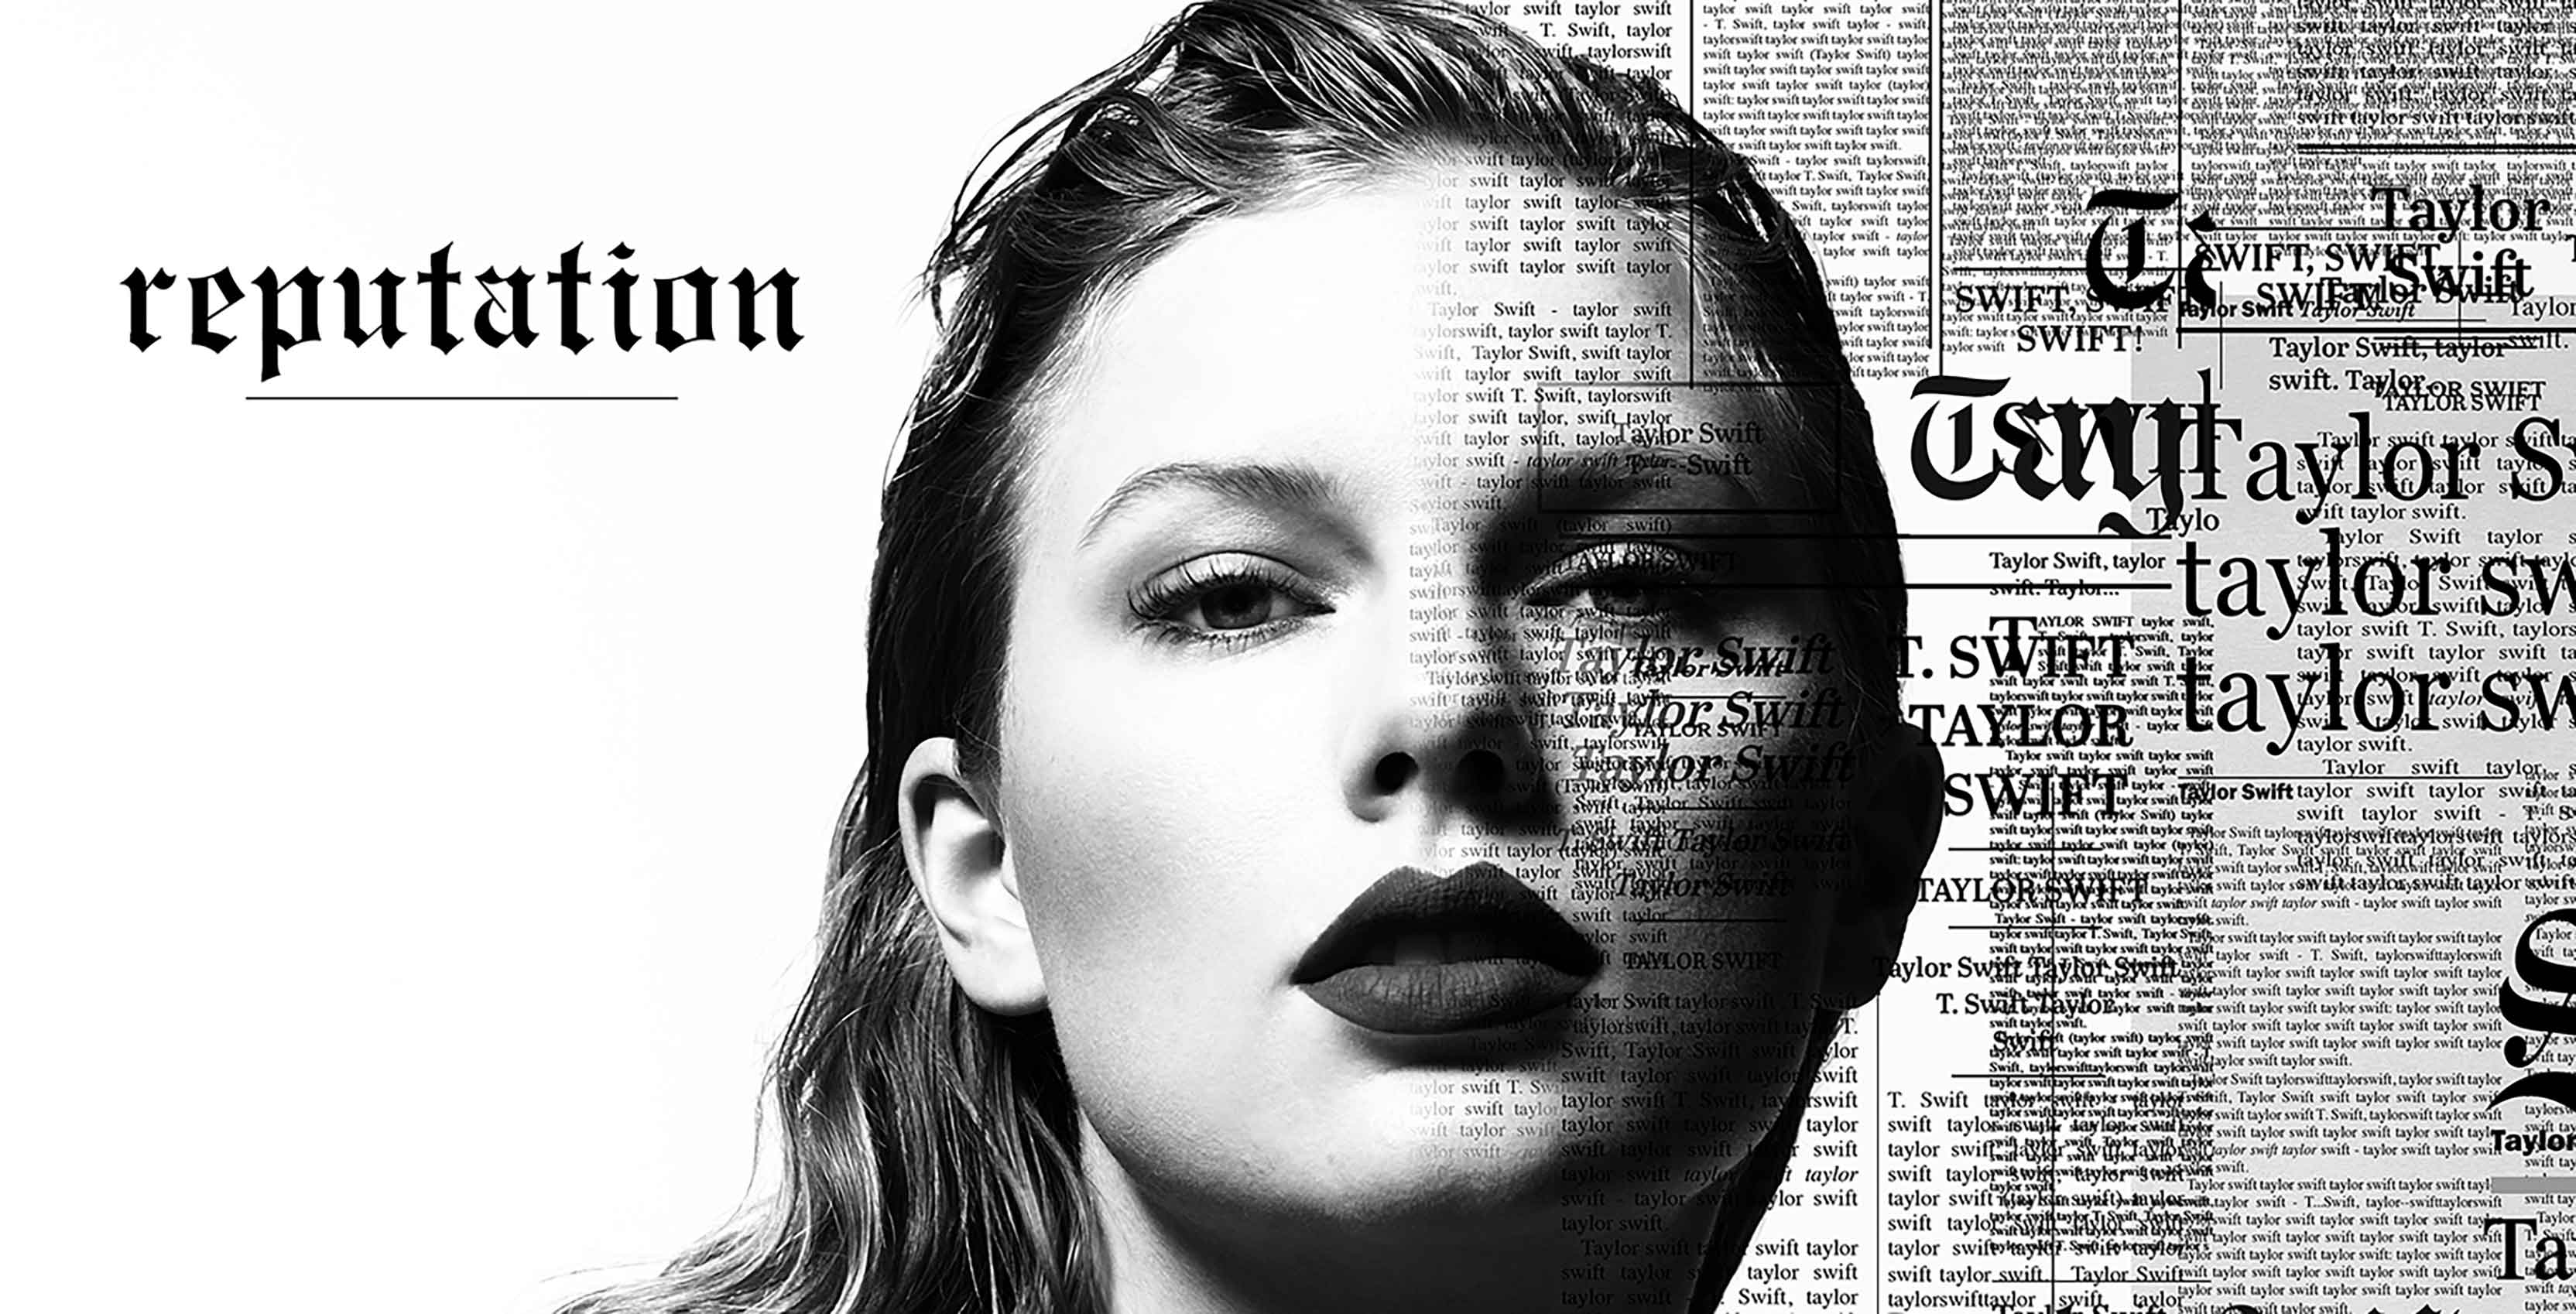 Taylor Swift Reputation album